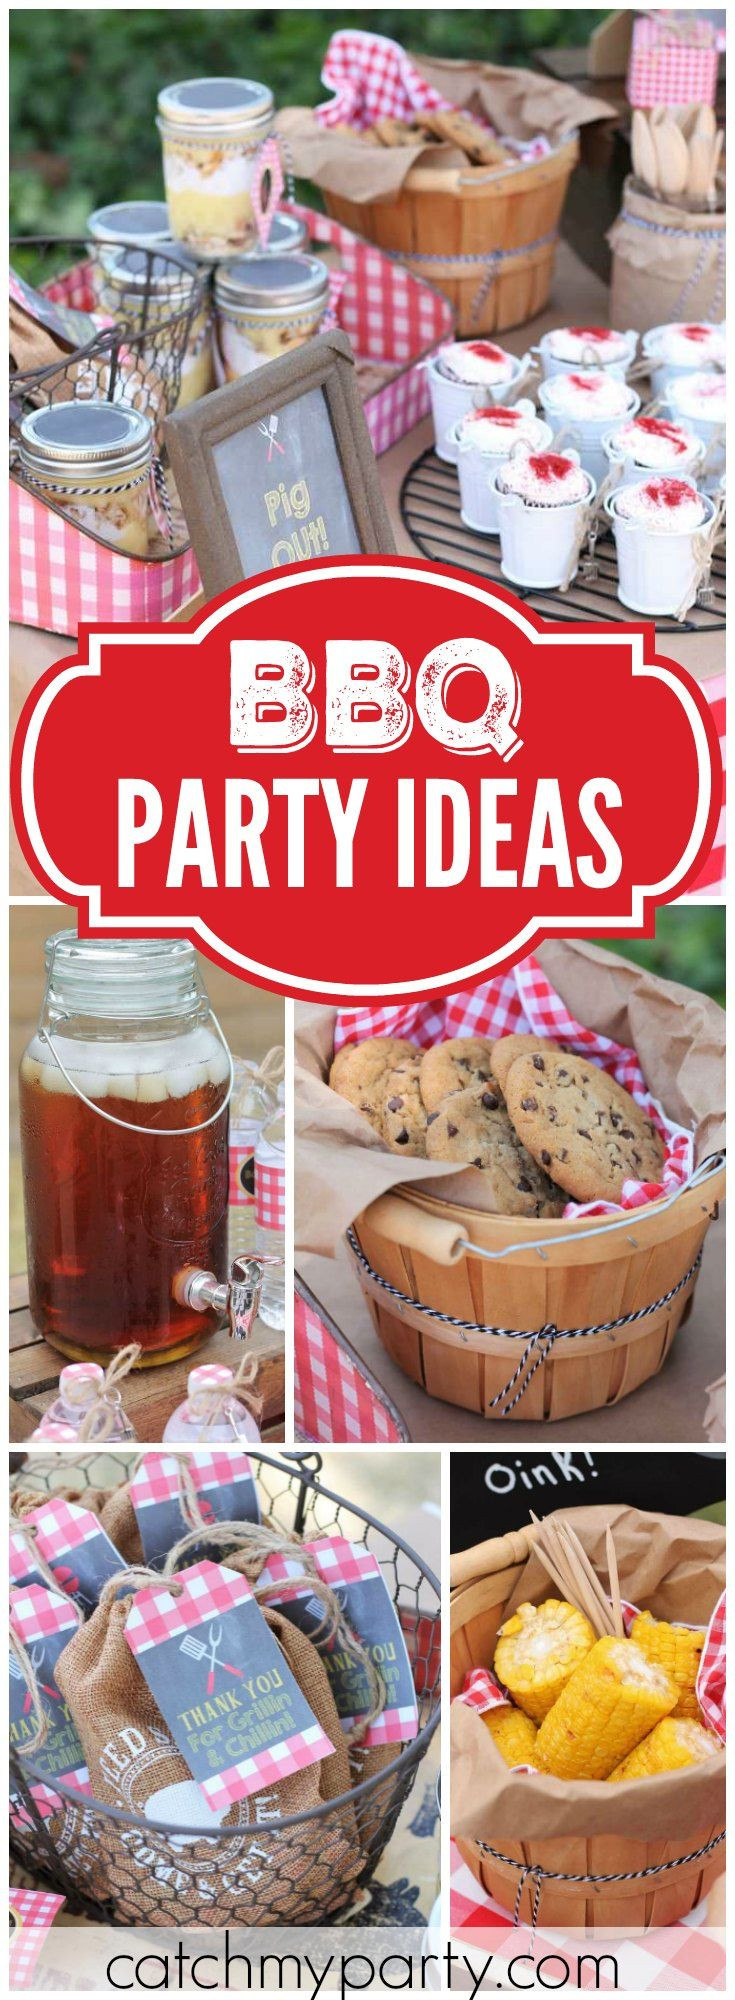 Backyard Party Food Ideas Pinterest
 The 25 best Backyard parties ideas on Pinterest